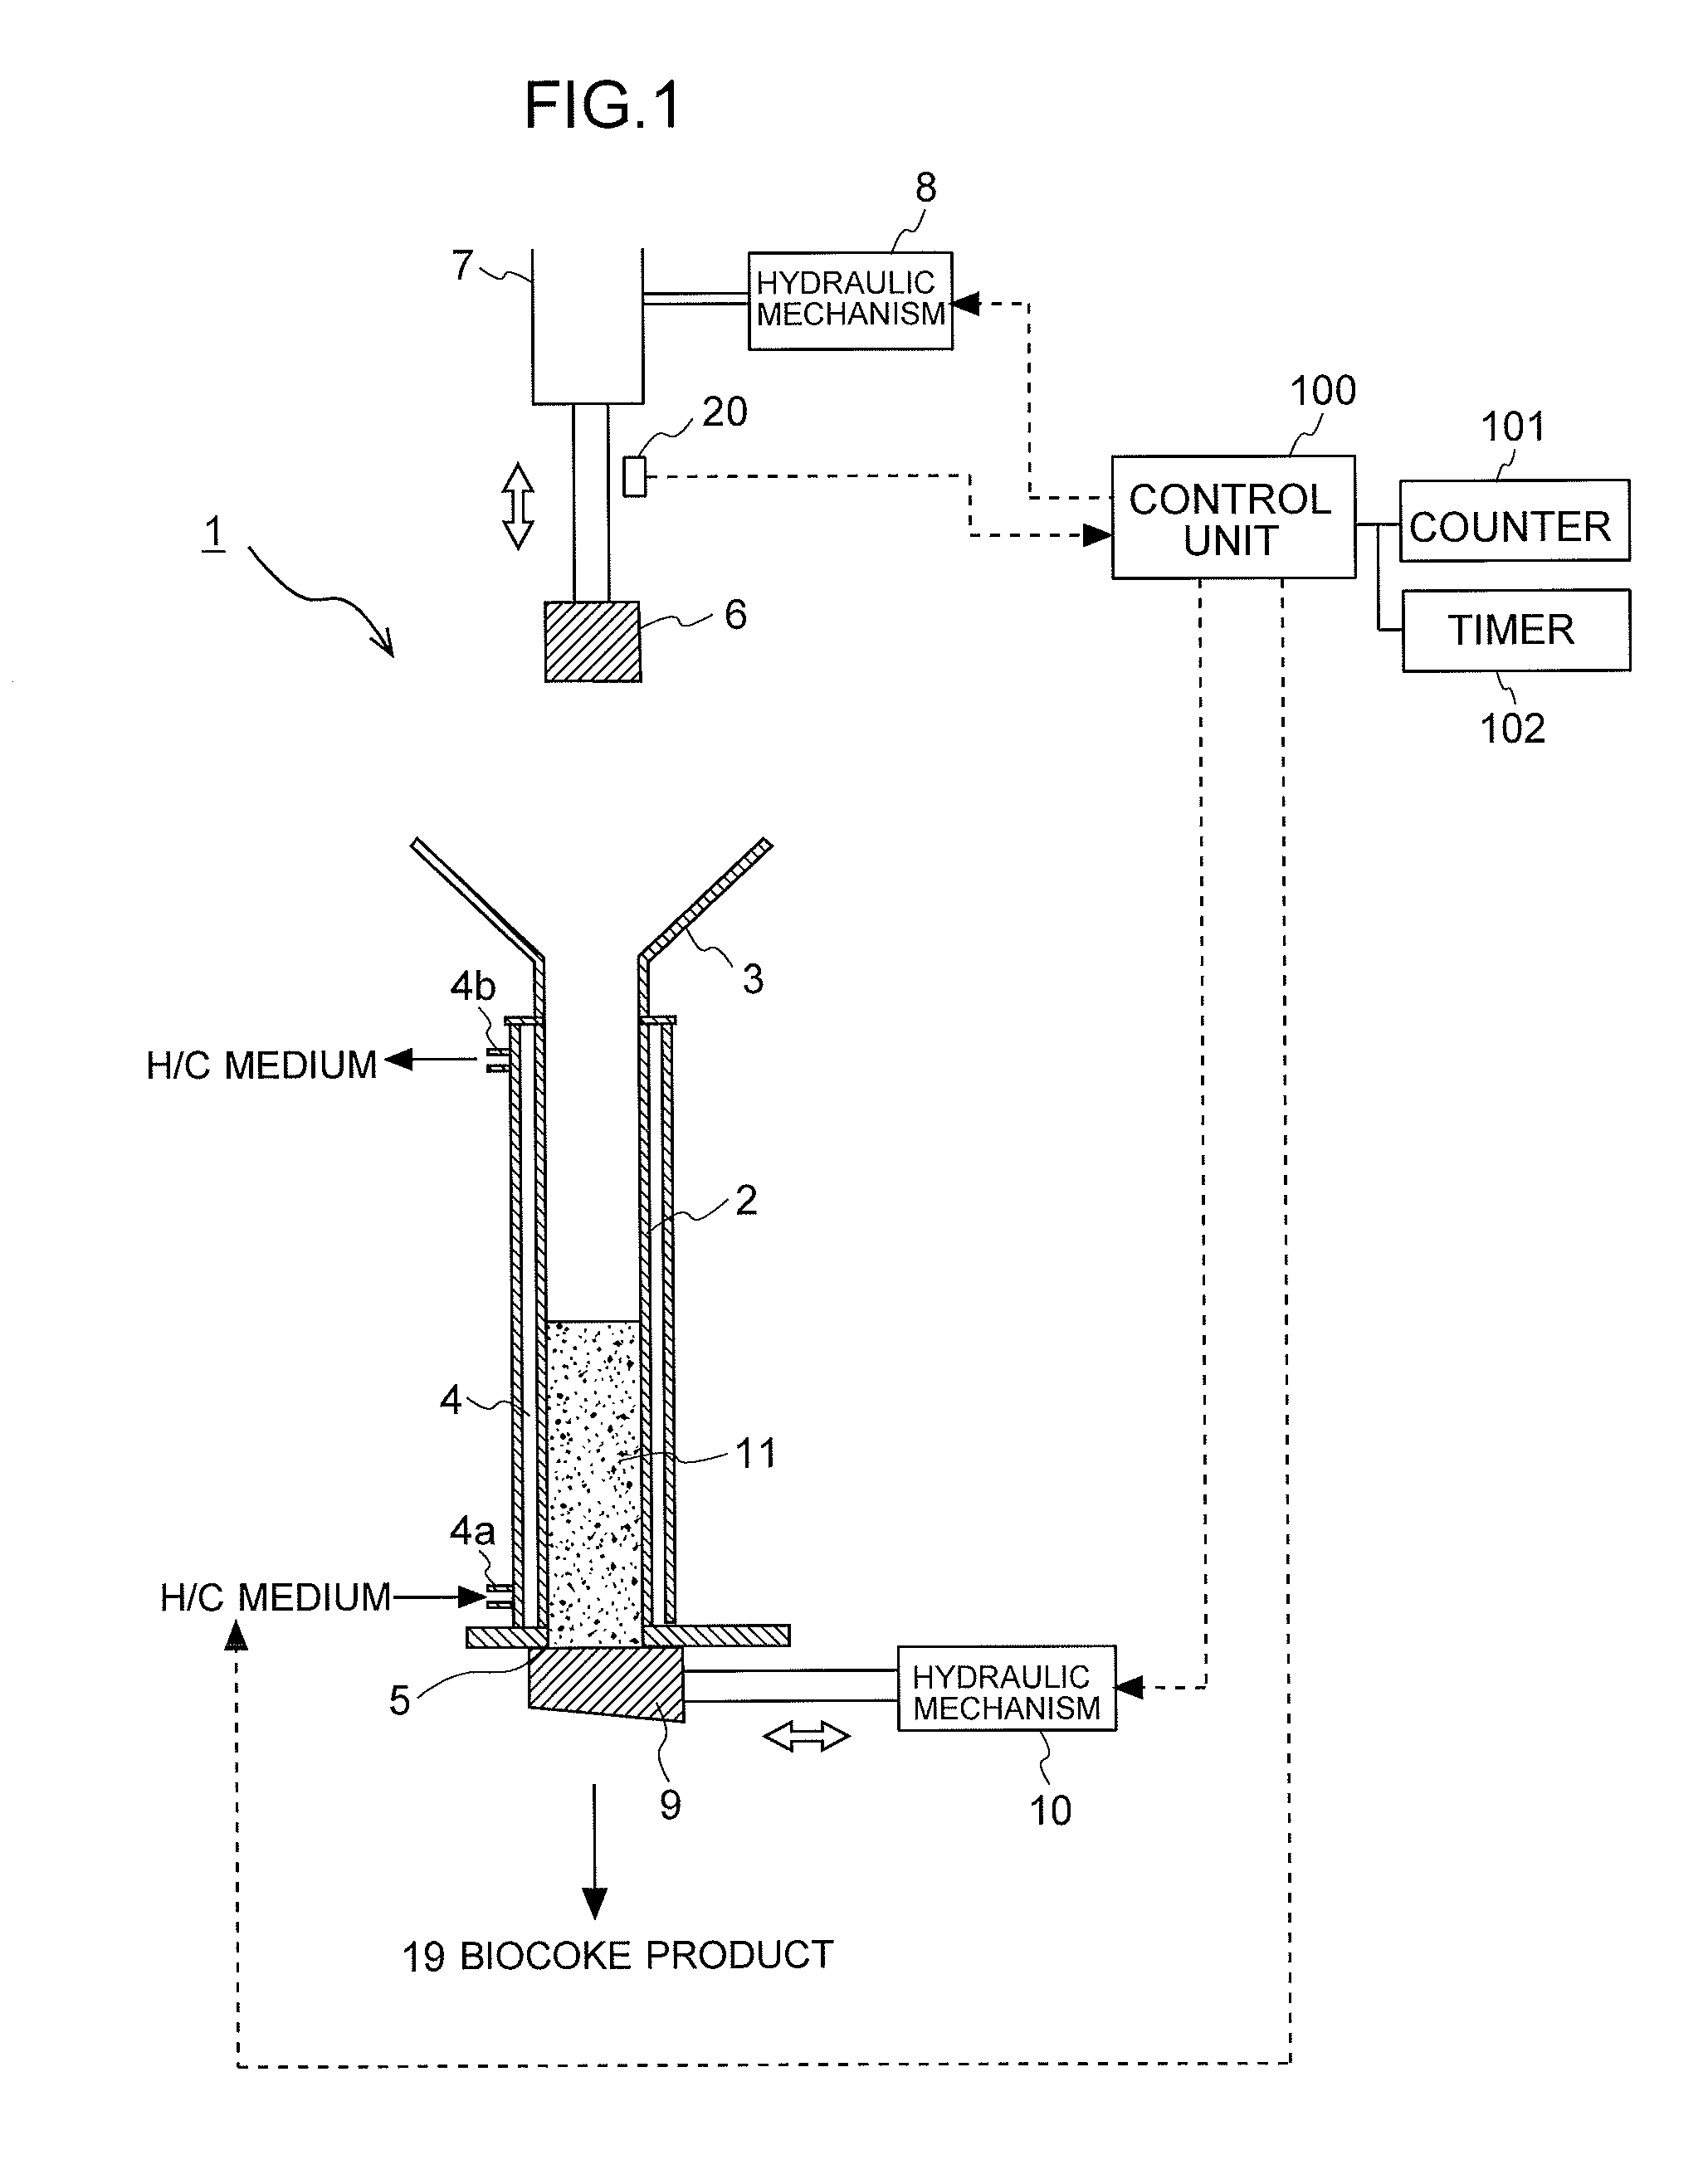 Biocokes producing method and apparatus